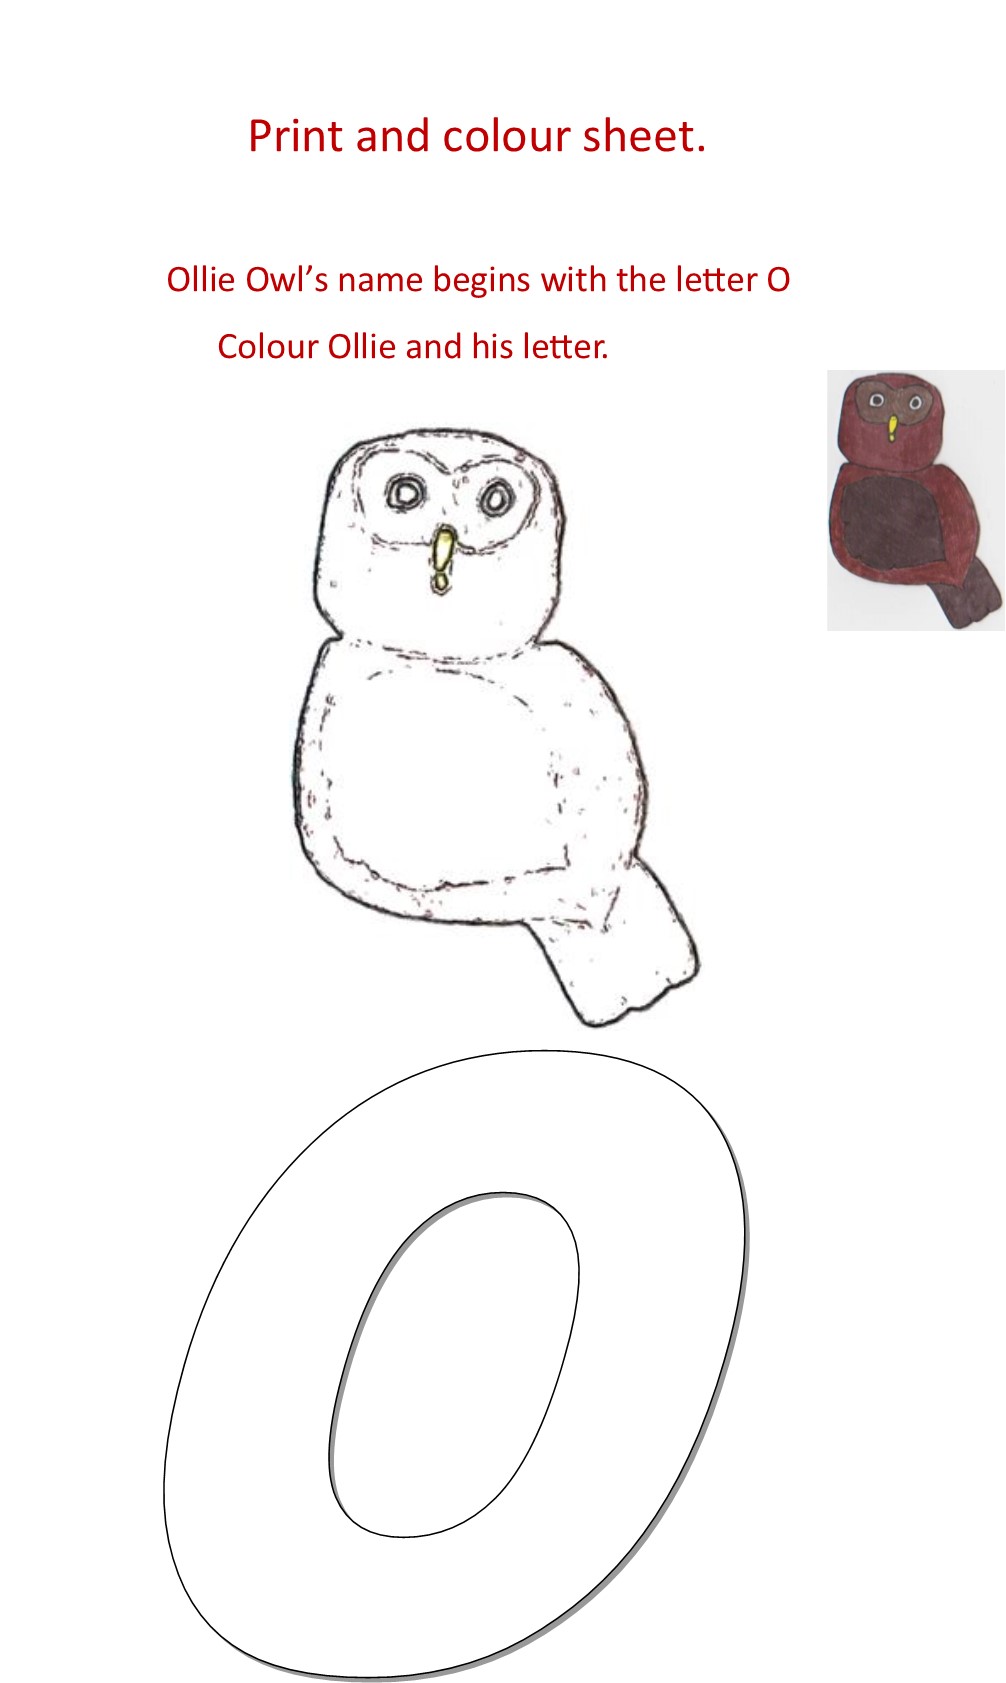 Ollie Owl colouring